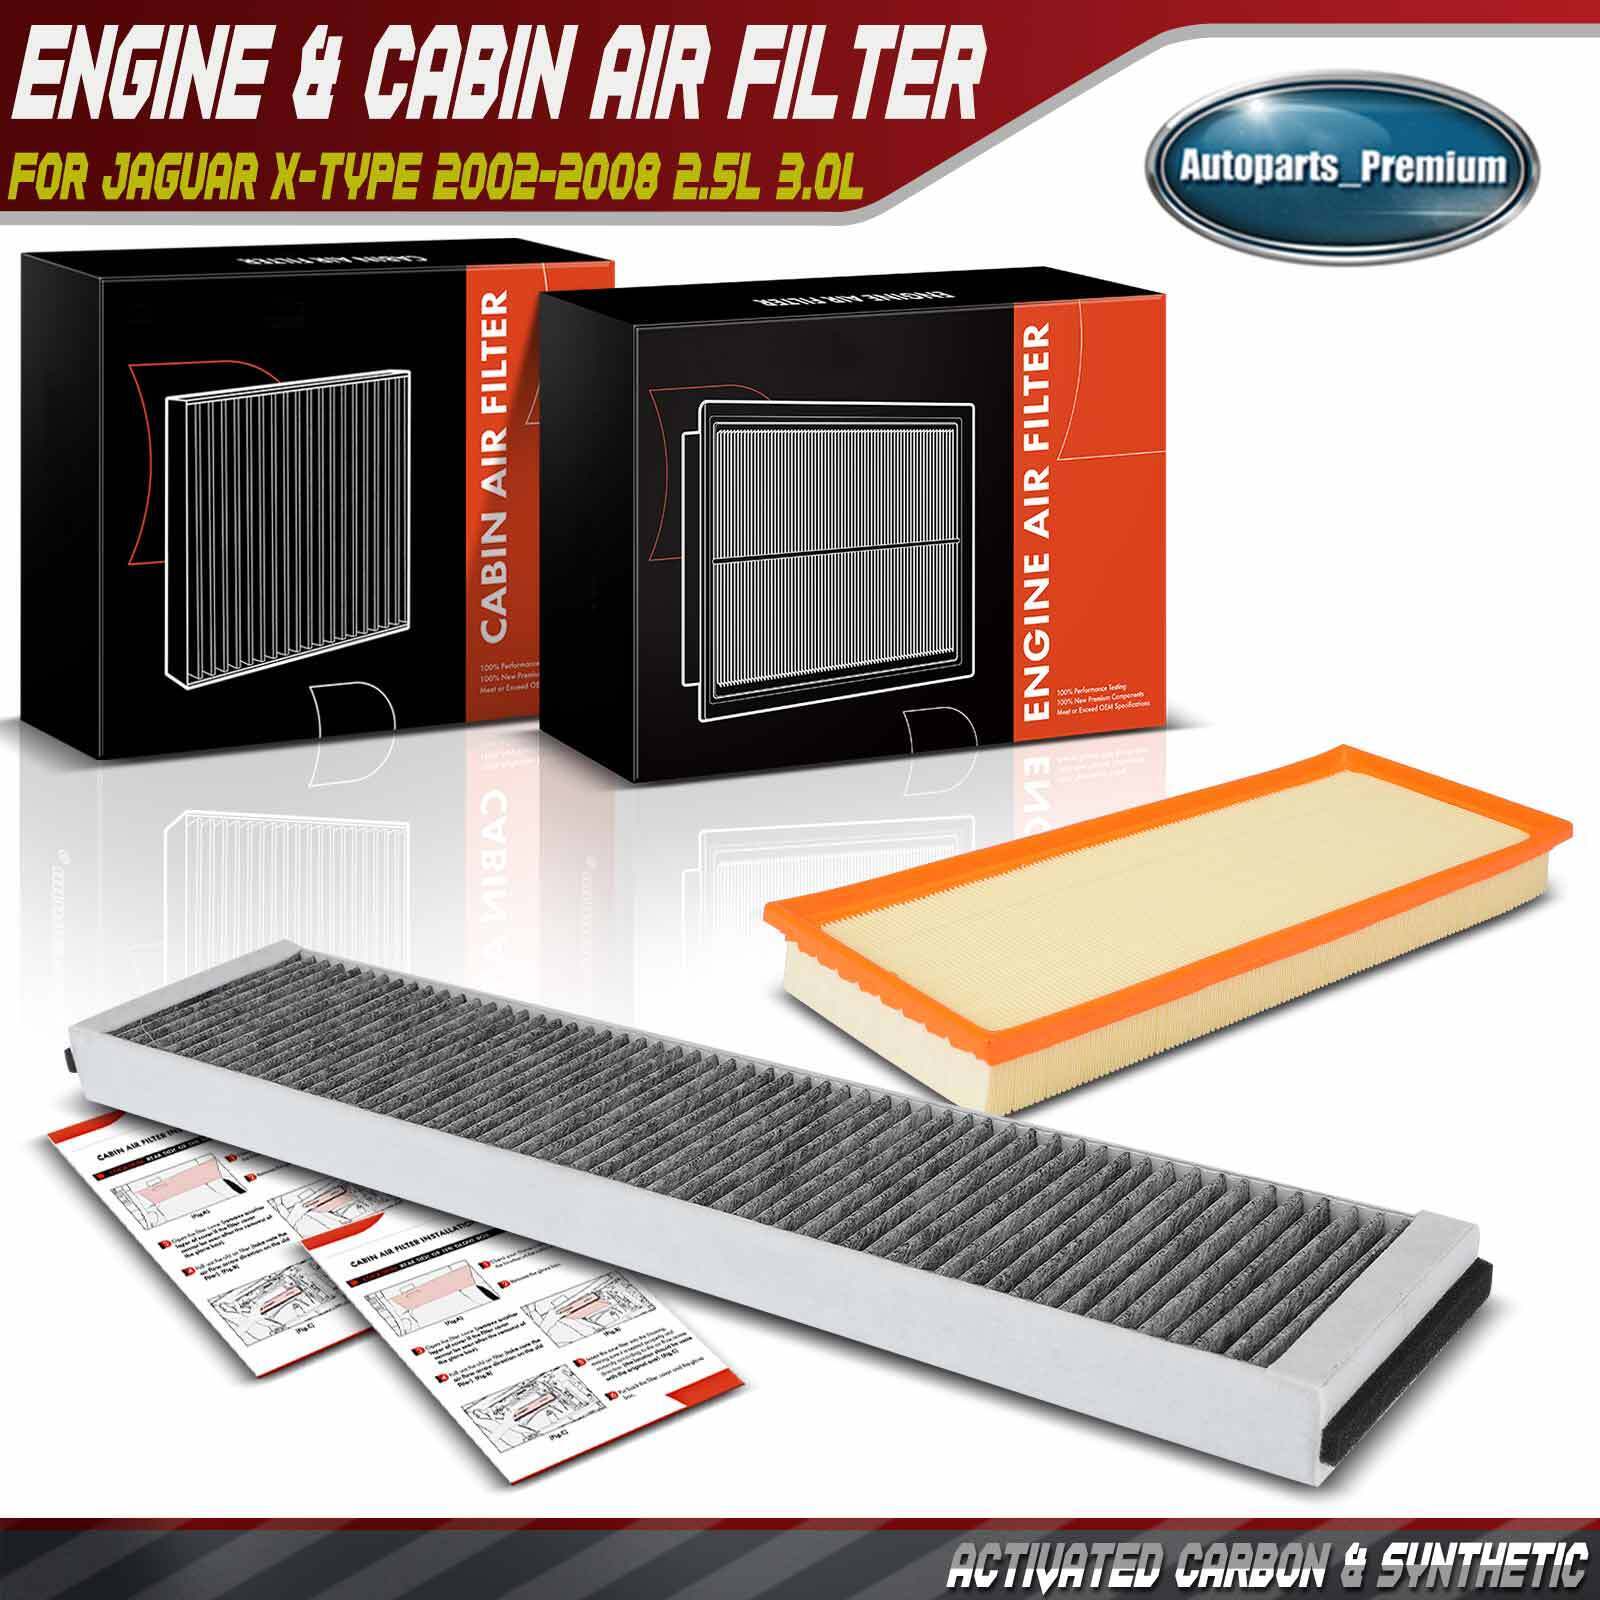 Engine & Activated Carbon Cabin Air Filter for Jaguar X-Type 02-08 2.5L 3.0L